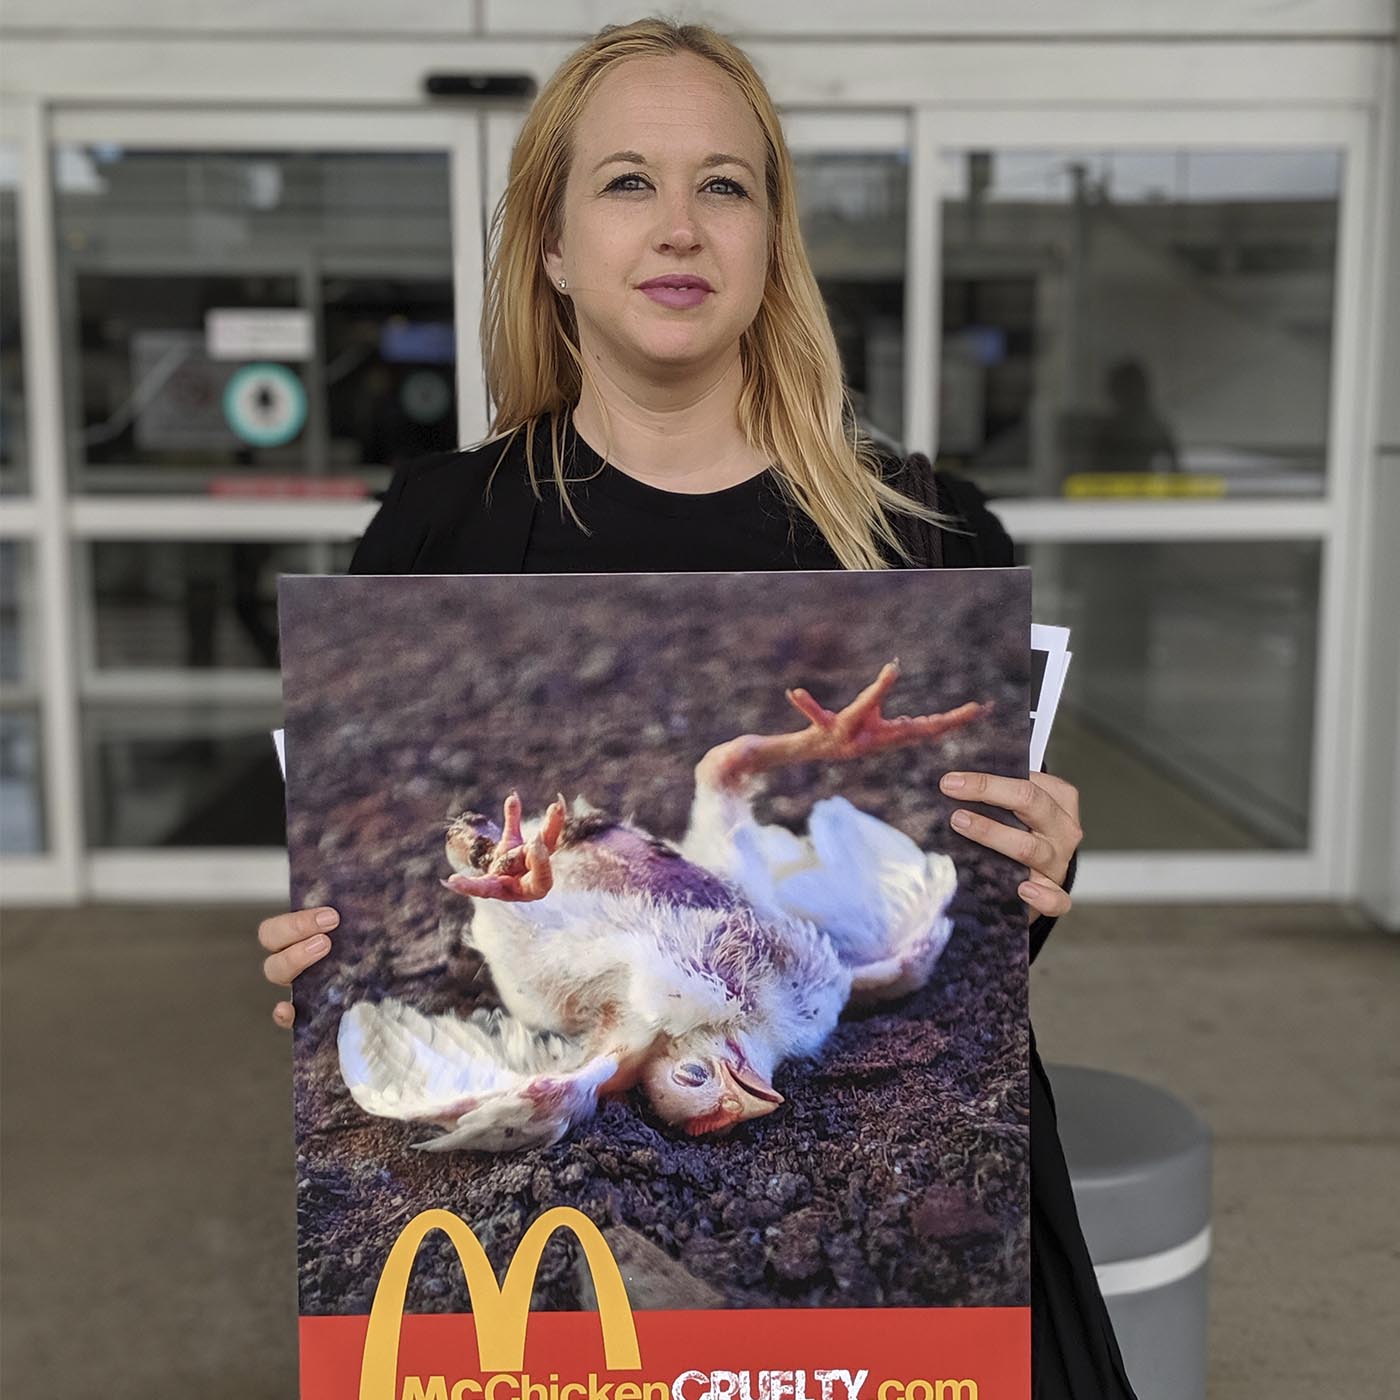 Protest against McDonald's